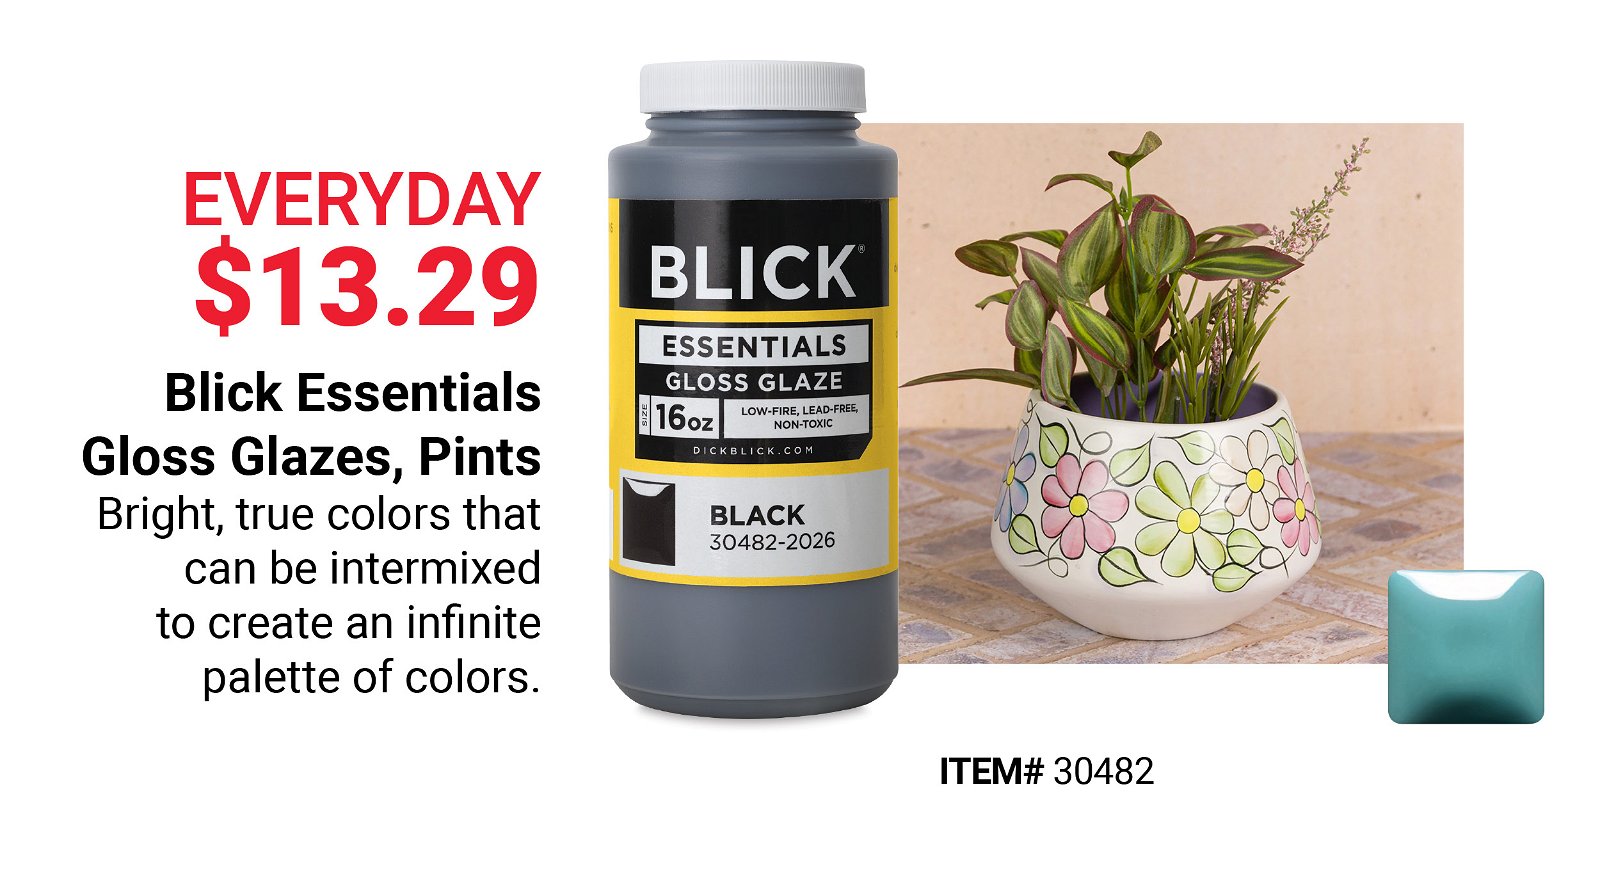 Everyday \\$13.29: Blick Essentials Gloss Glazes, Pints